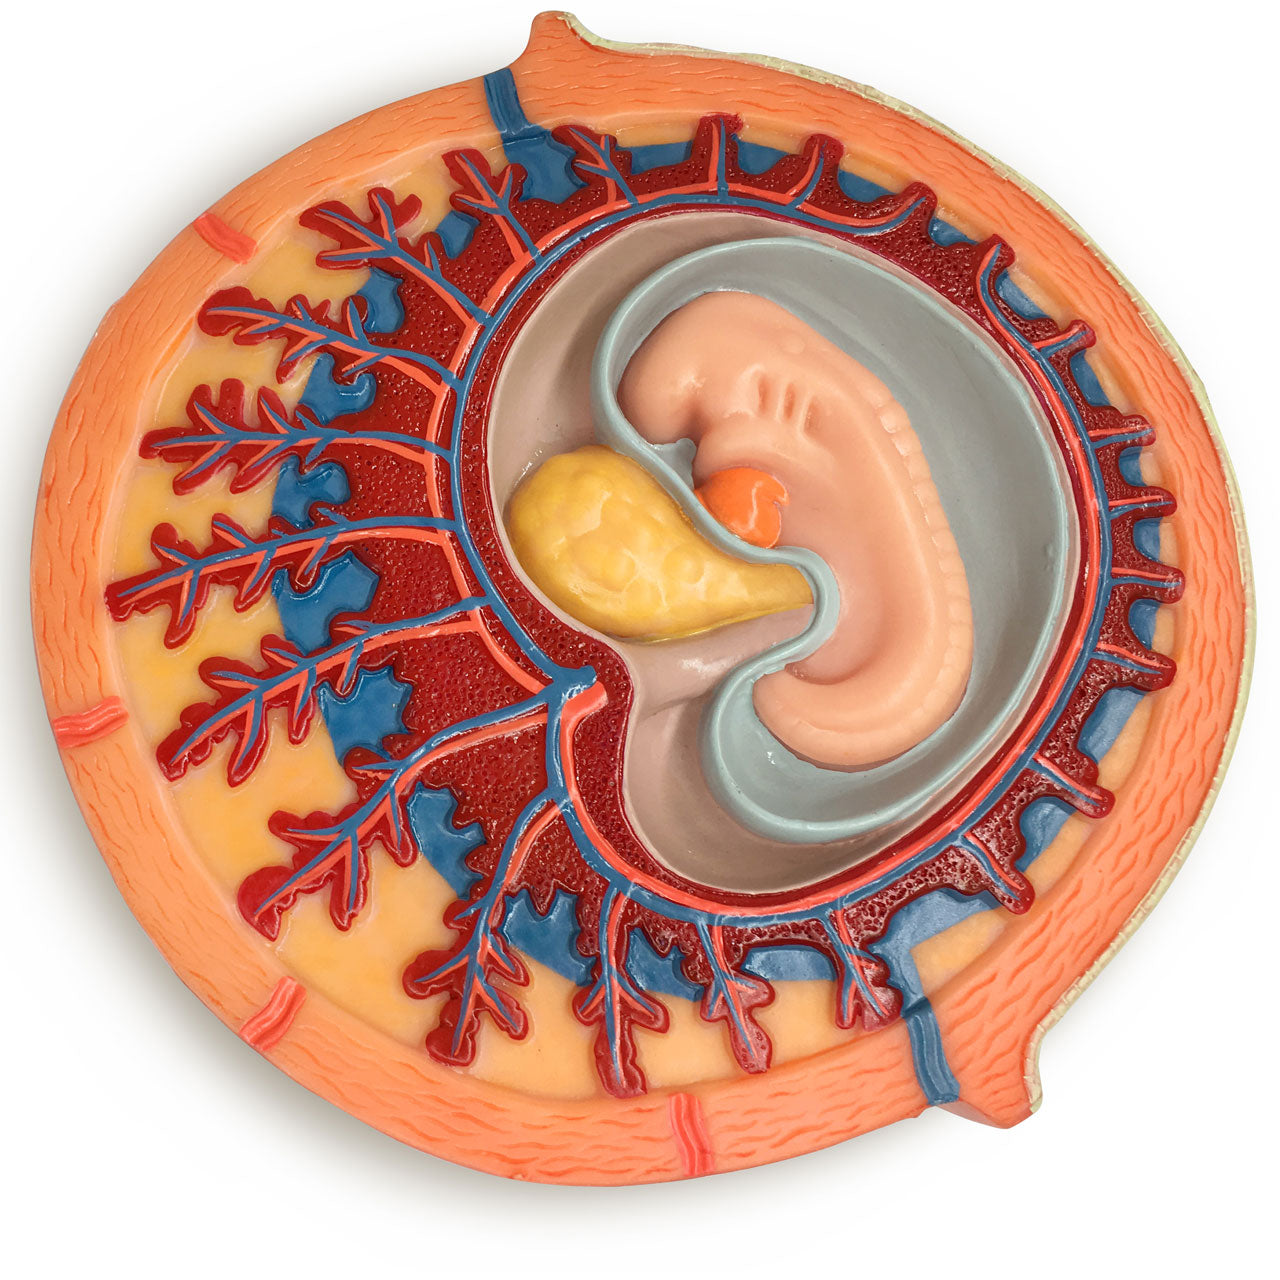 Evotech Scientific Fertilization and Early Embryonic Development Process Anatomy Model